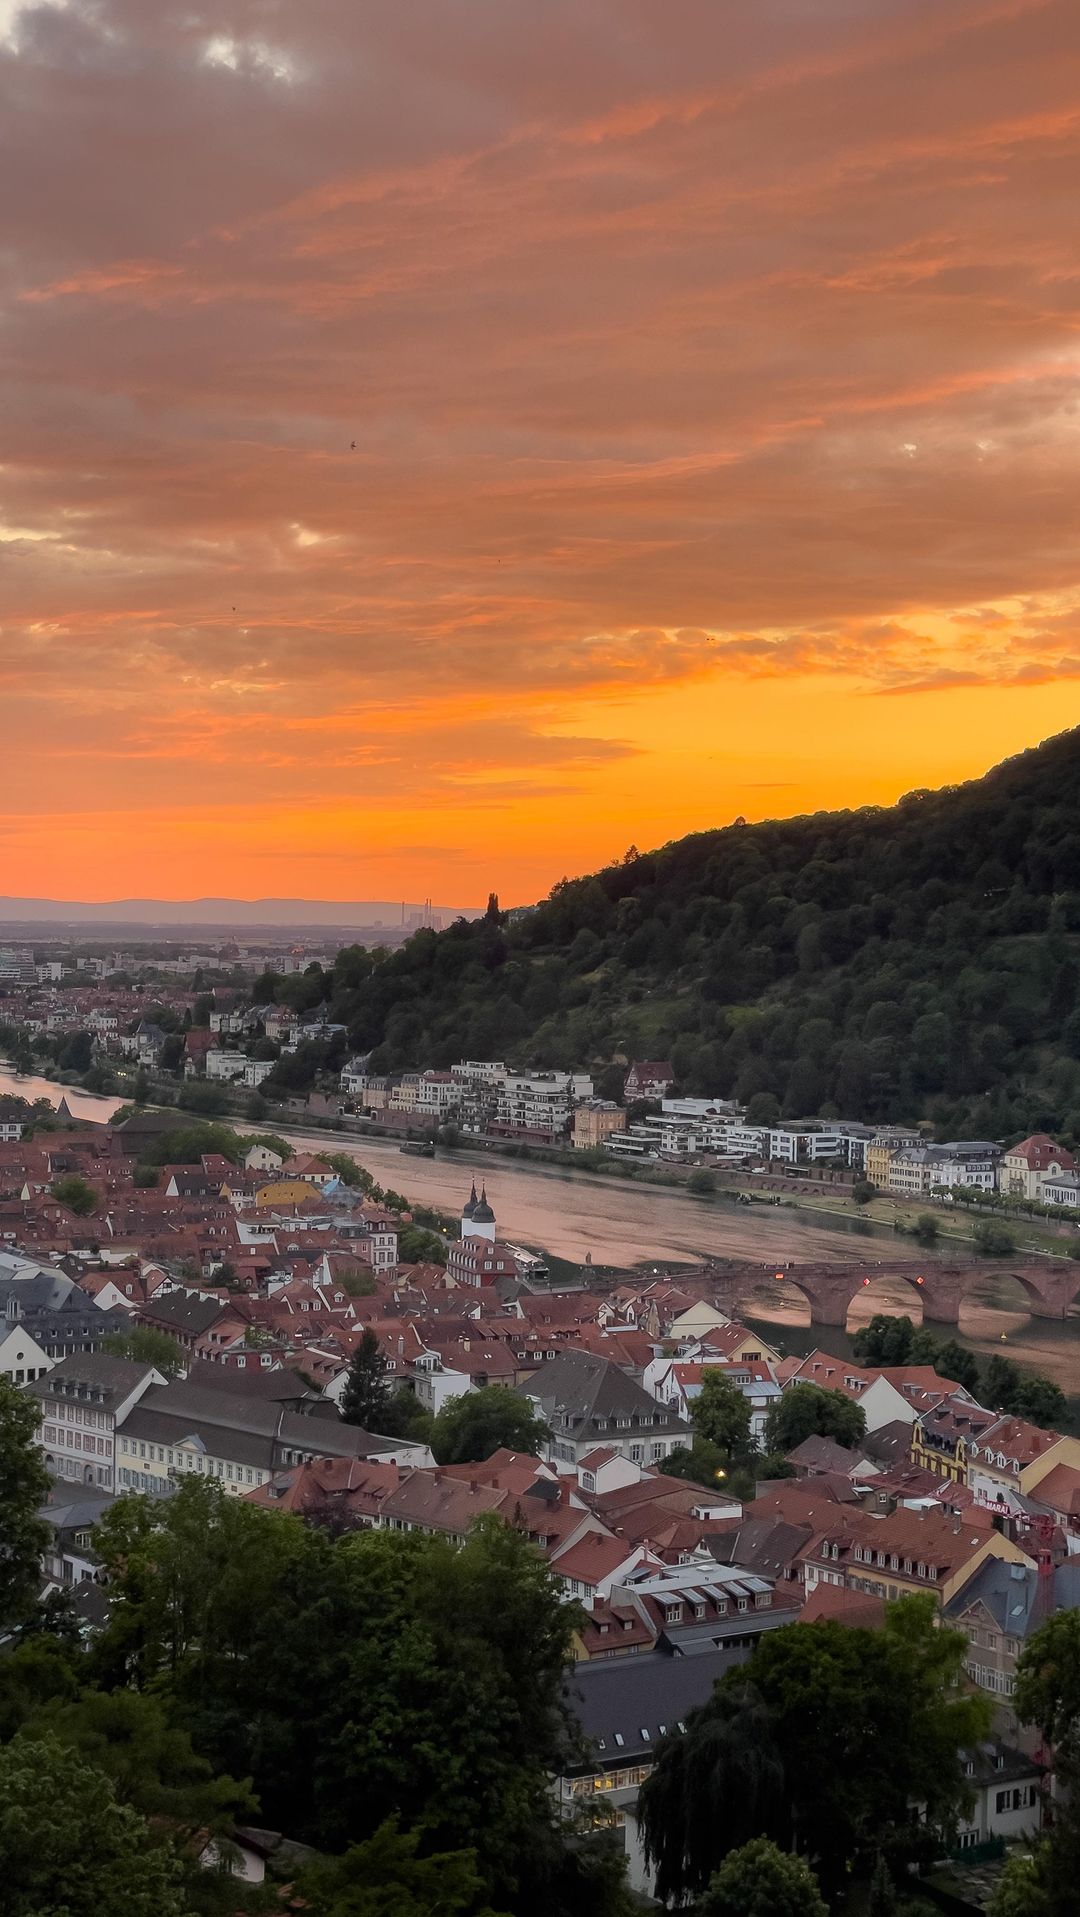 Historic and Scenic Journey through Heidelberg and Surroundings